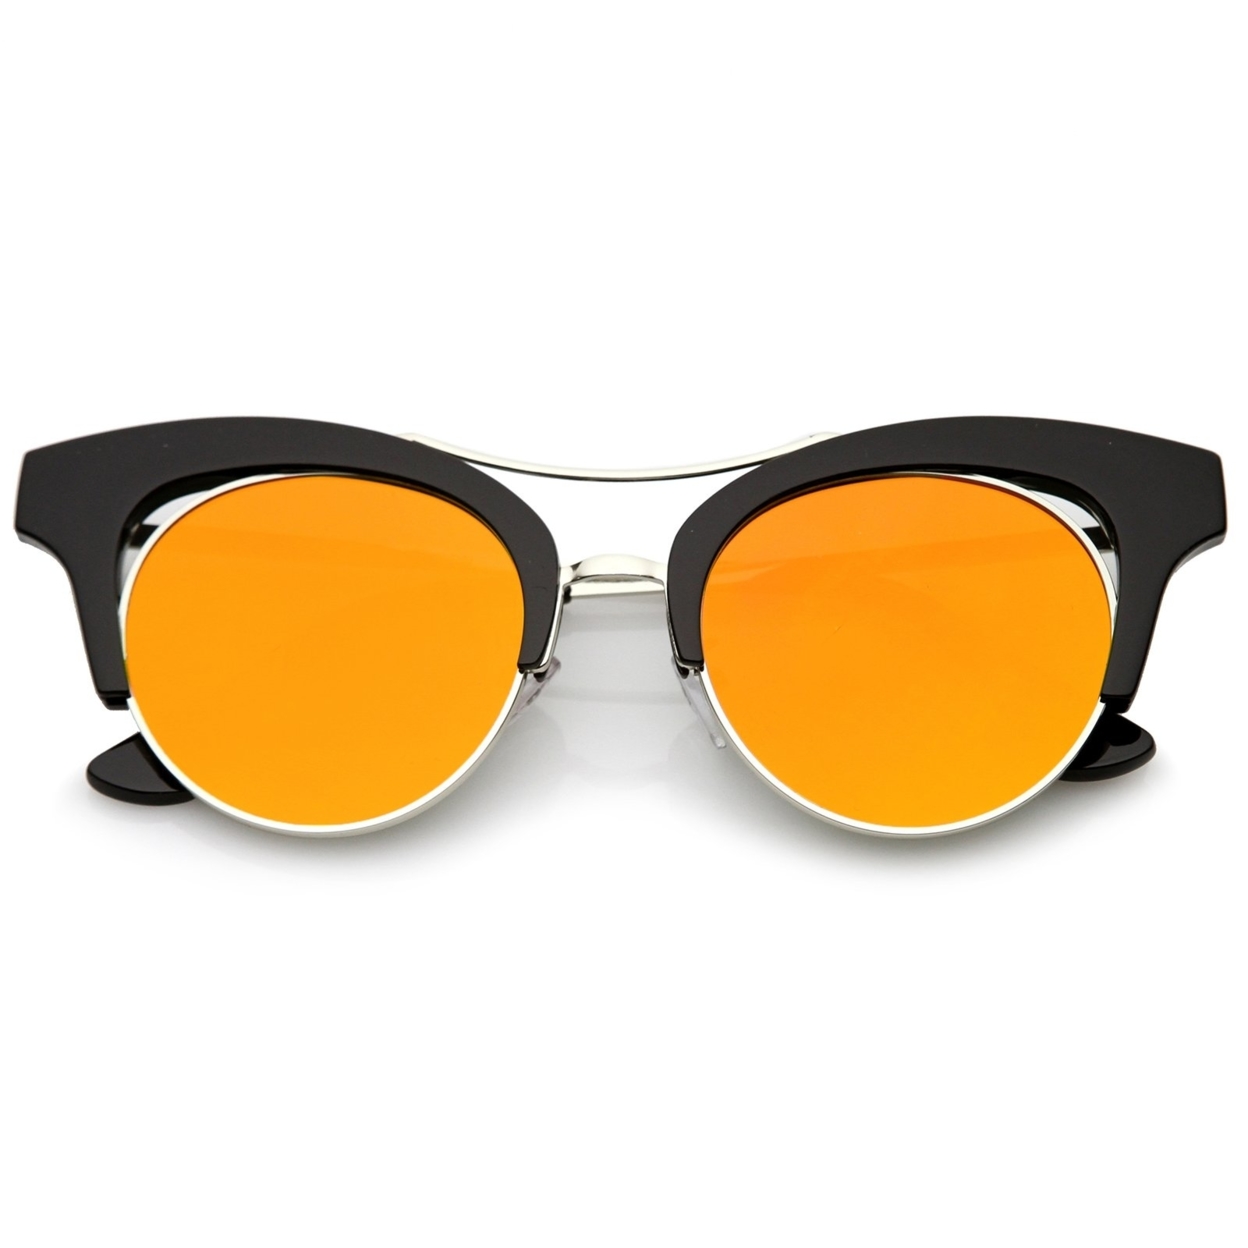 Women's Oversize Cutout Brow Bar Mirror Round Flat Lens Cat Eye Sunglasses 51mm - Black-Gold / Green Mirror